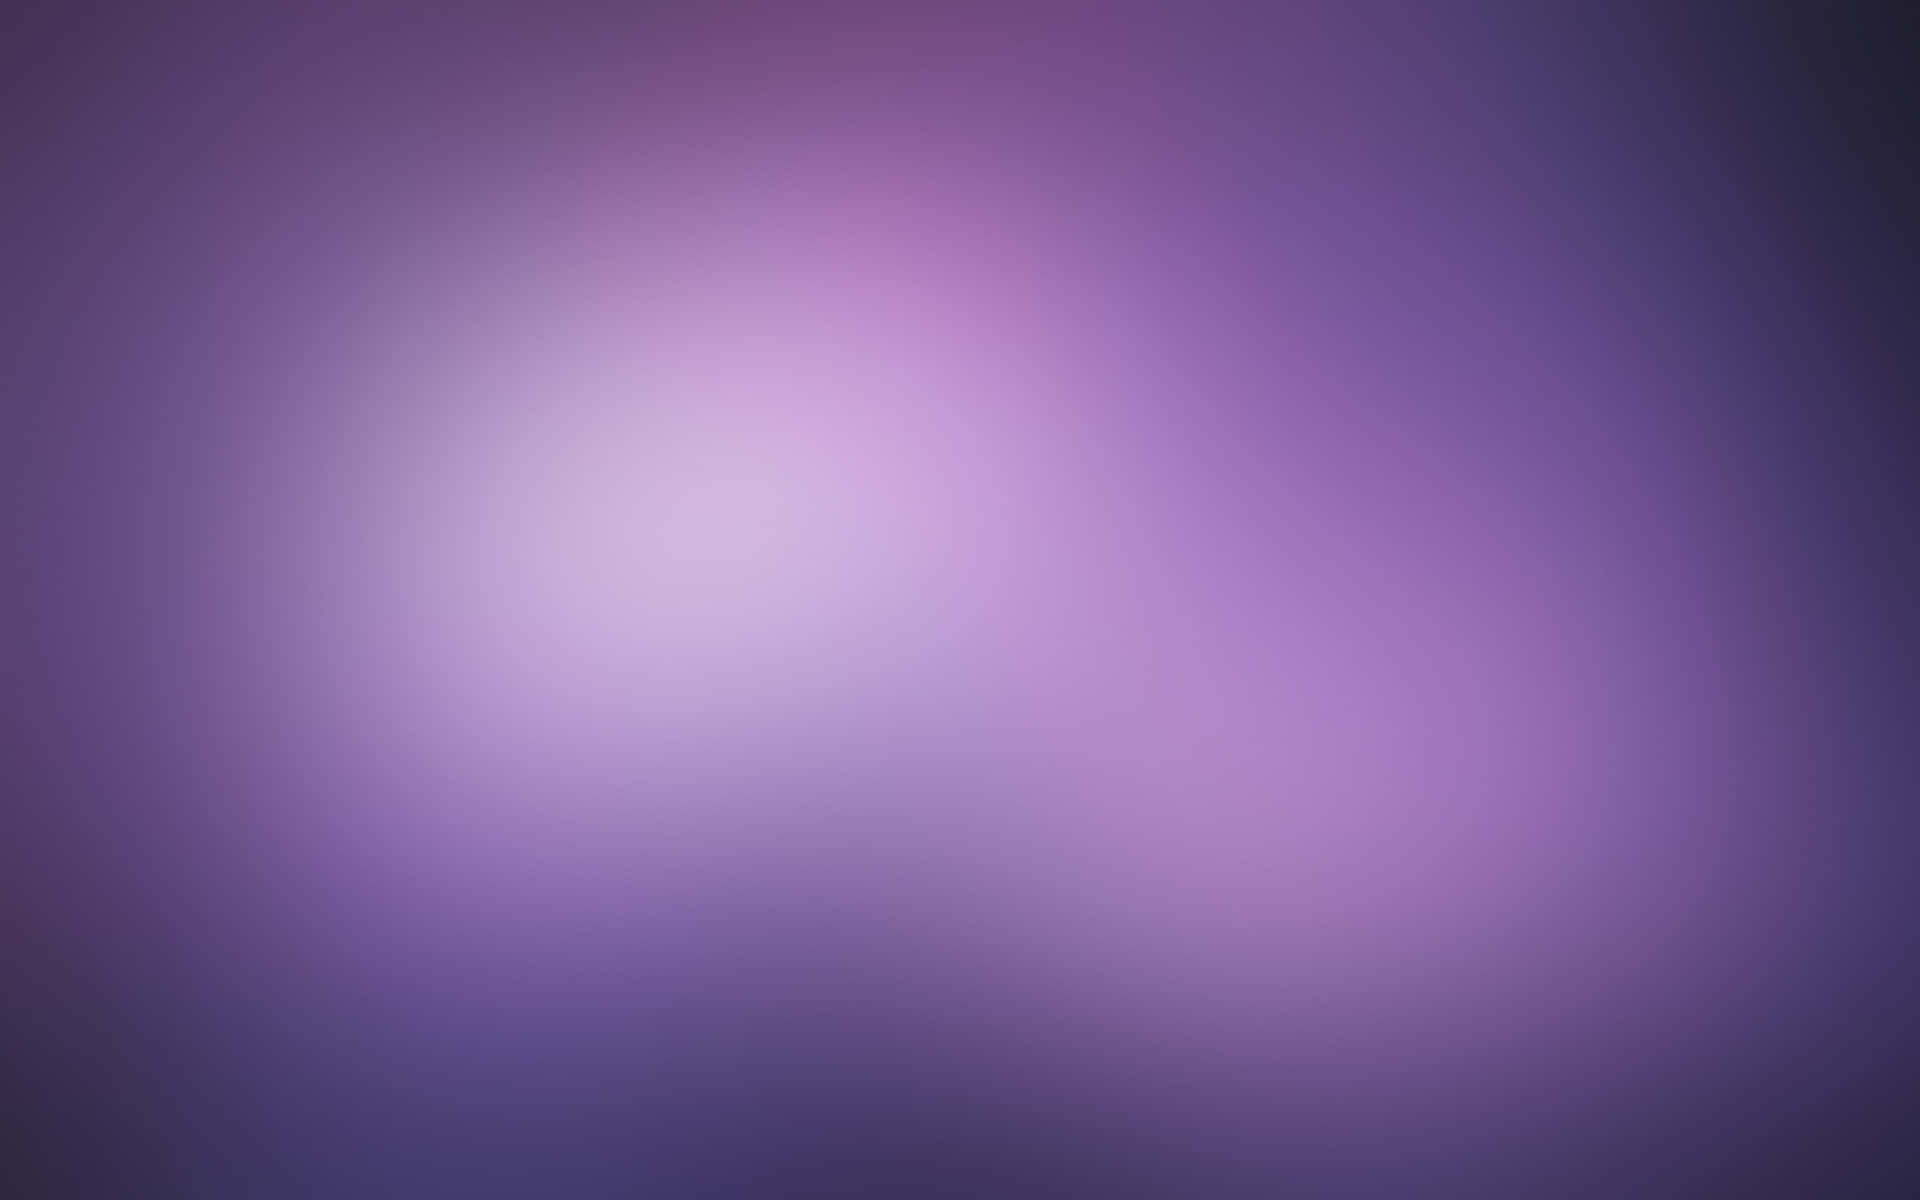 Purple Gradient Pictures  Download Free Images on Unsplash